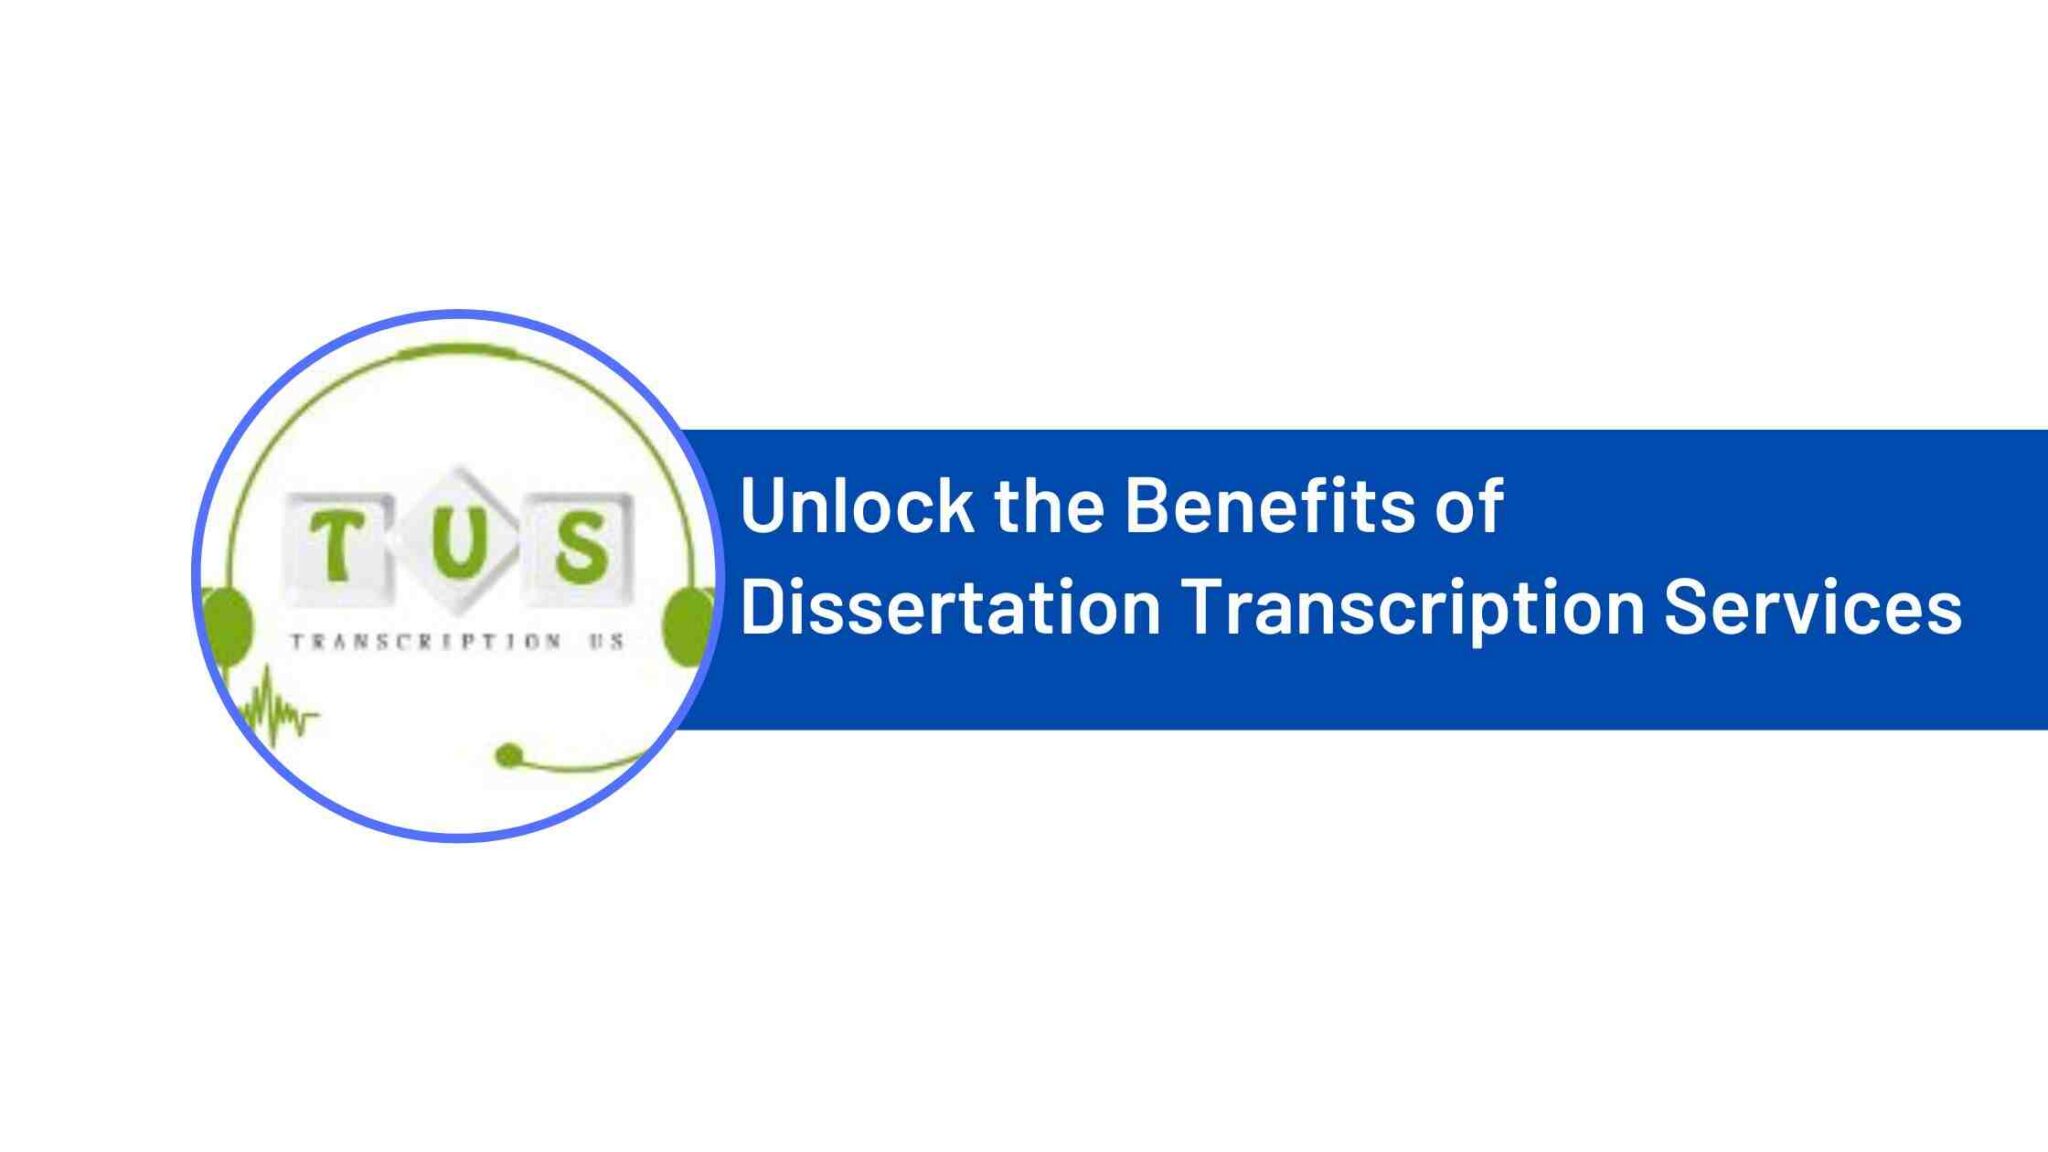 dissertation transcription services